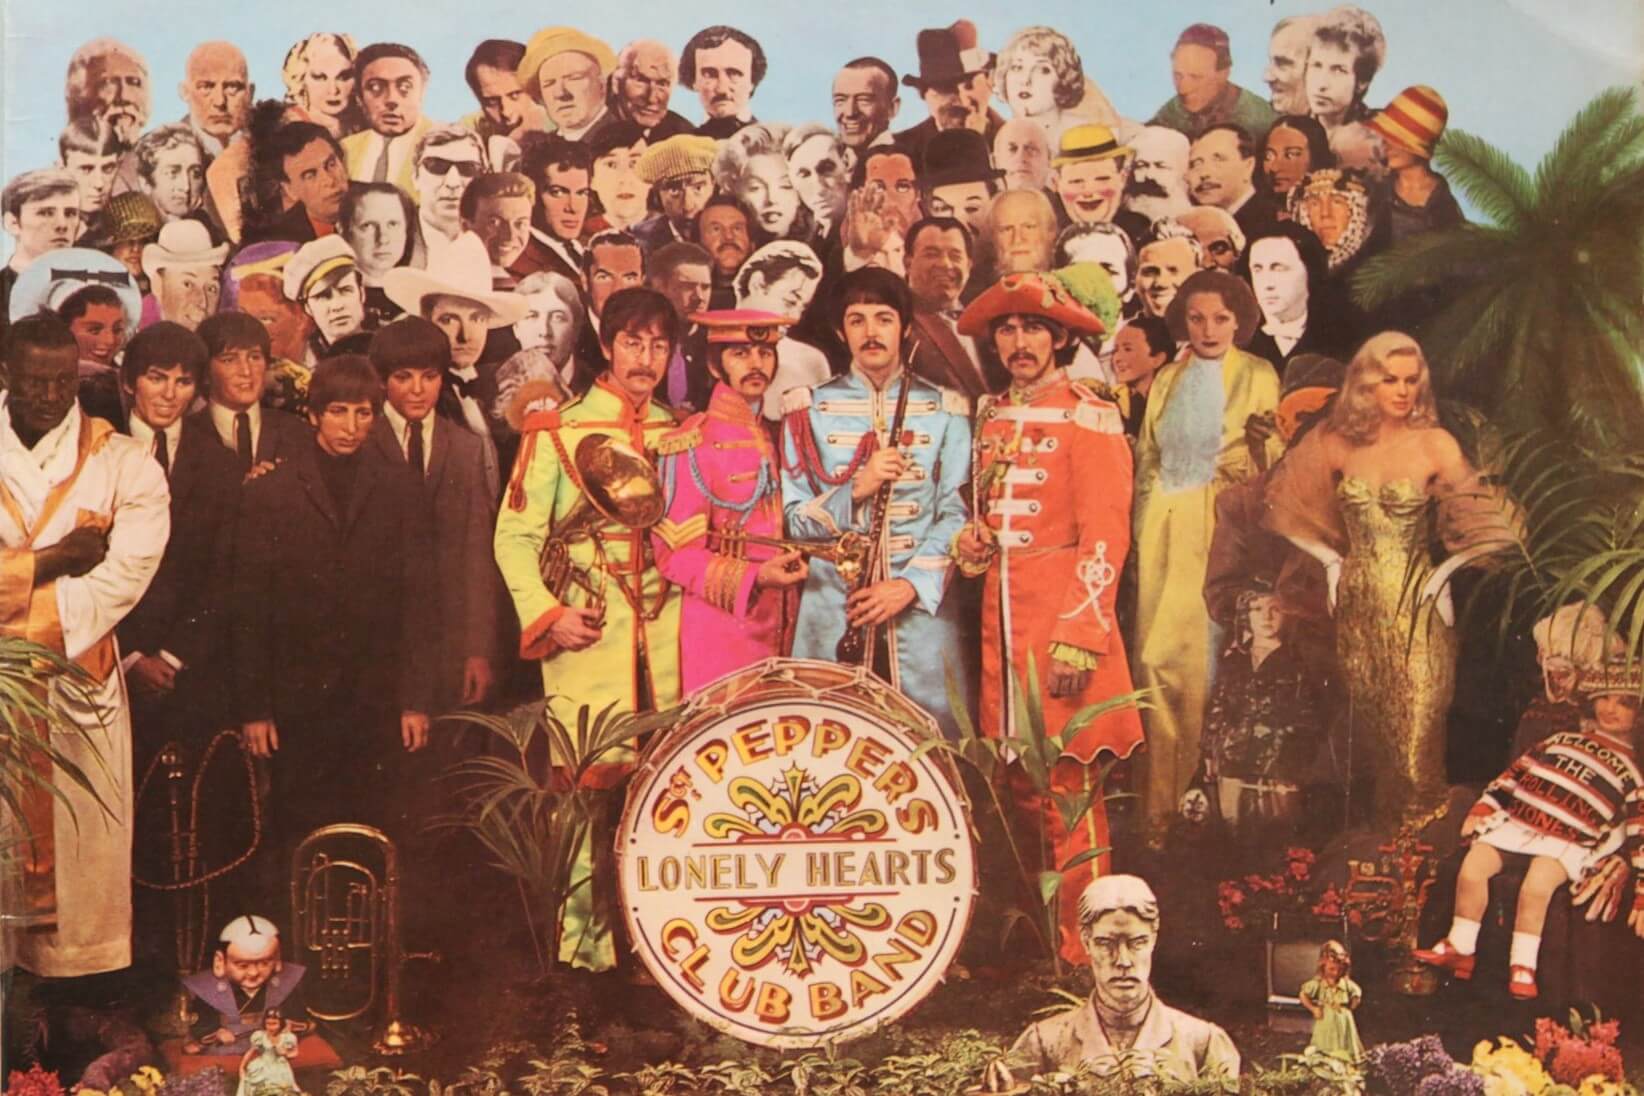 A vinyl of The Beatles' 'Sgt. Pepper'